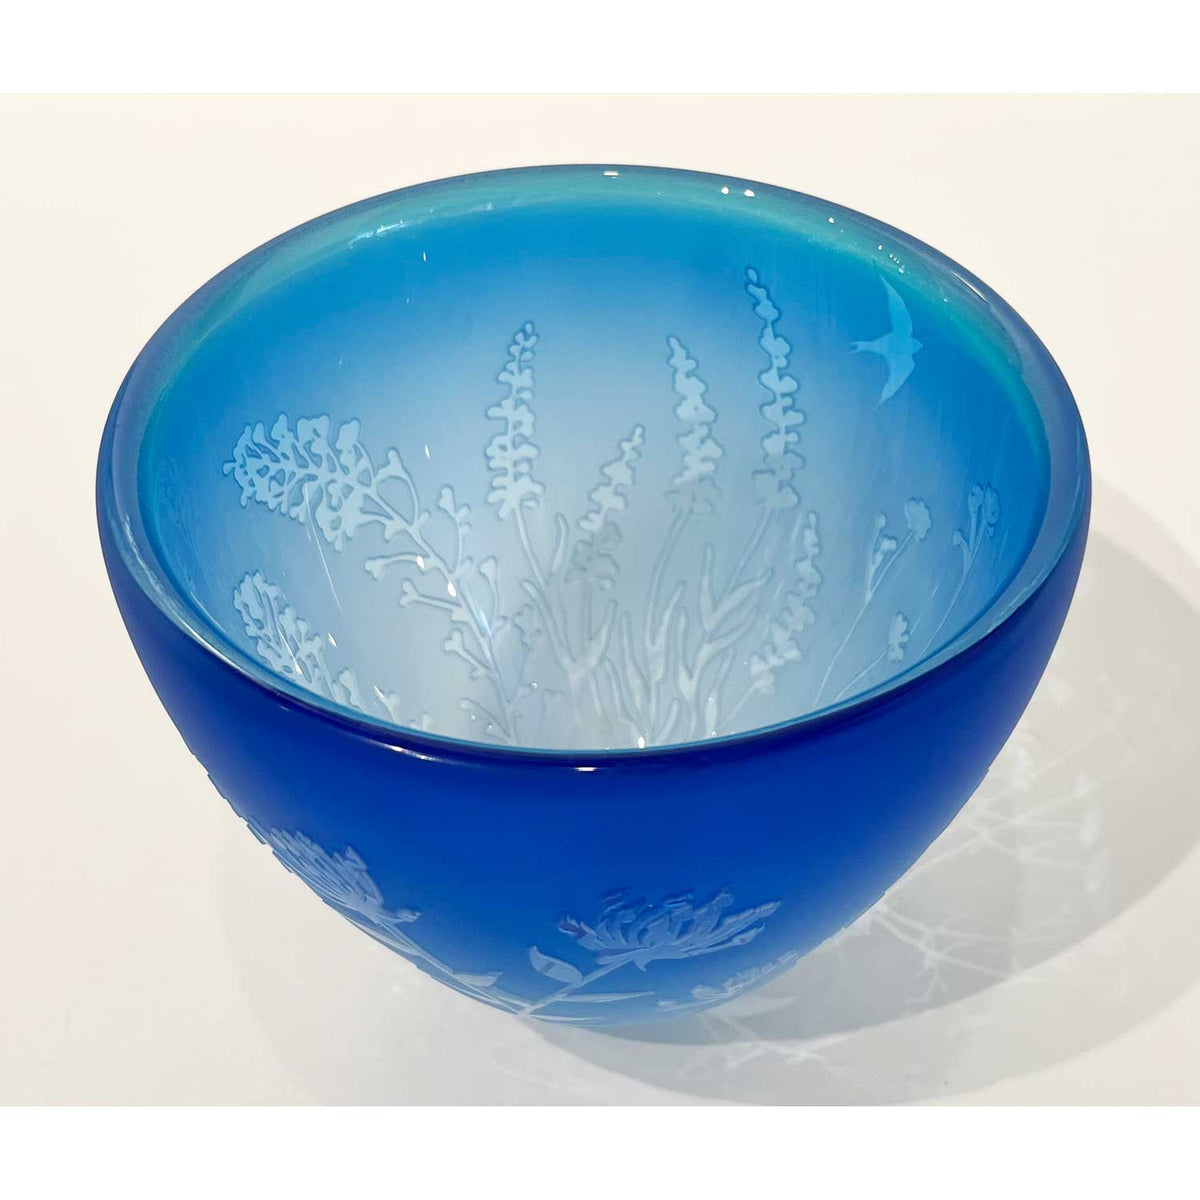 Carol Nesbitt - Large Bowl Copper Blue/Medium Blue, 5.25" x 5.5" x 5.5"